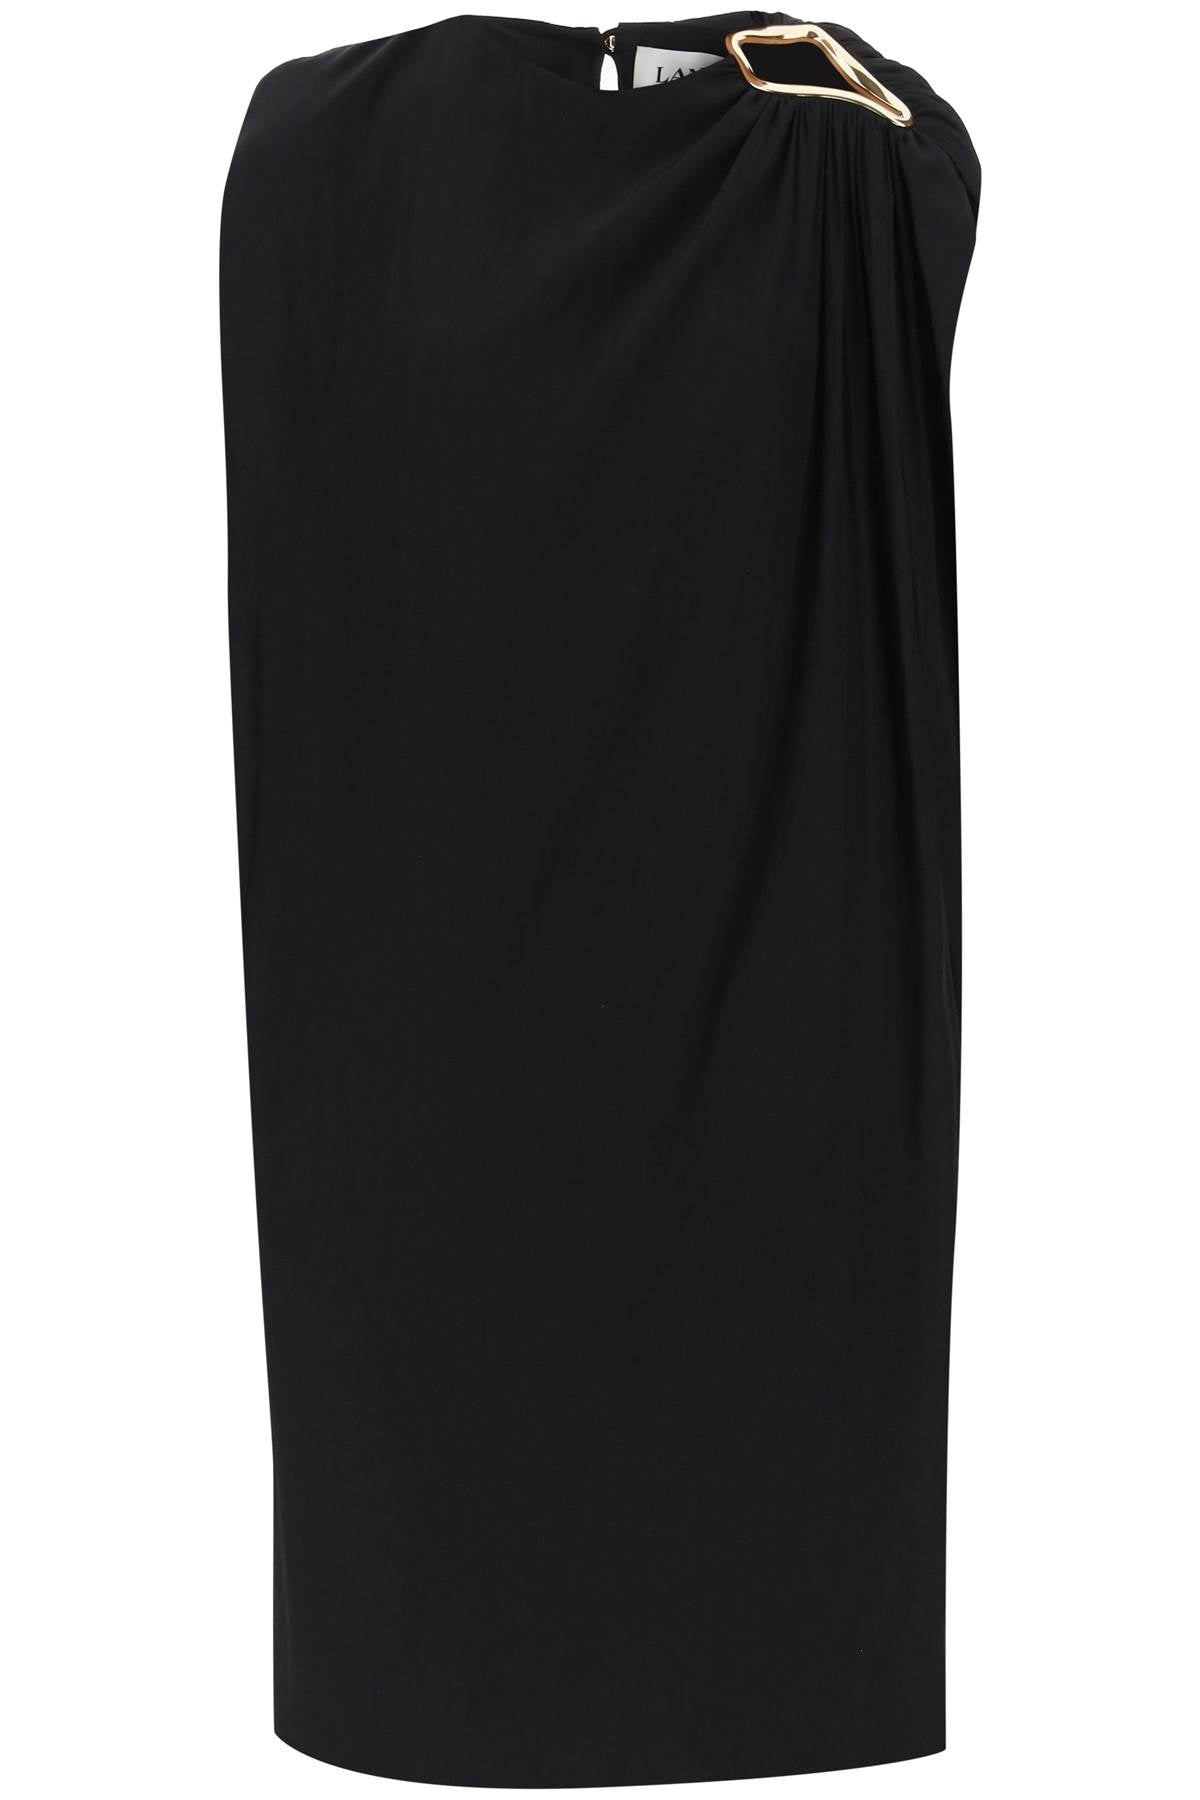 LANVIN Chic Black Draped Midi Dress for Women